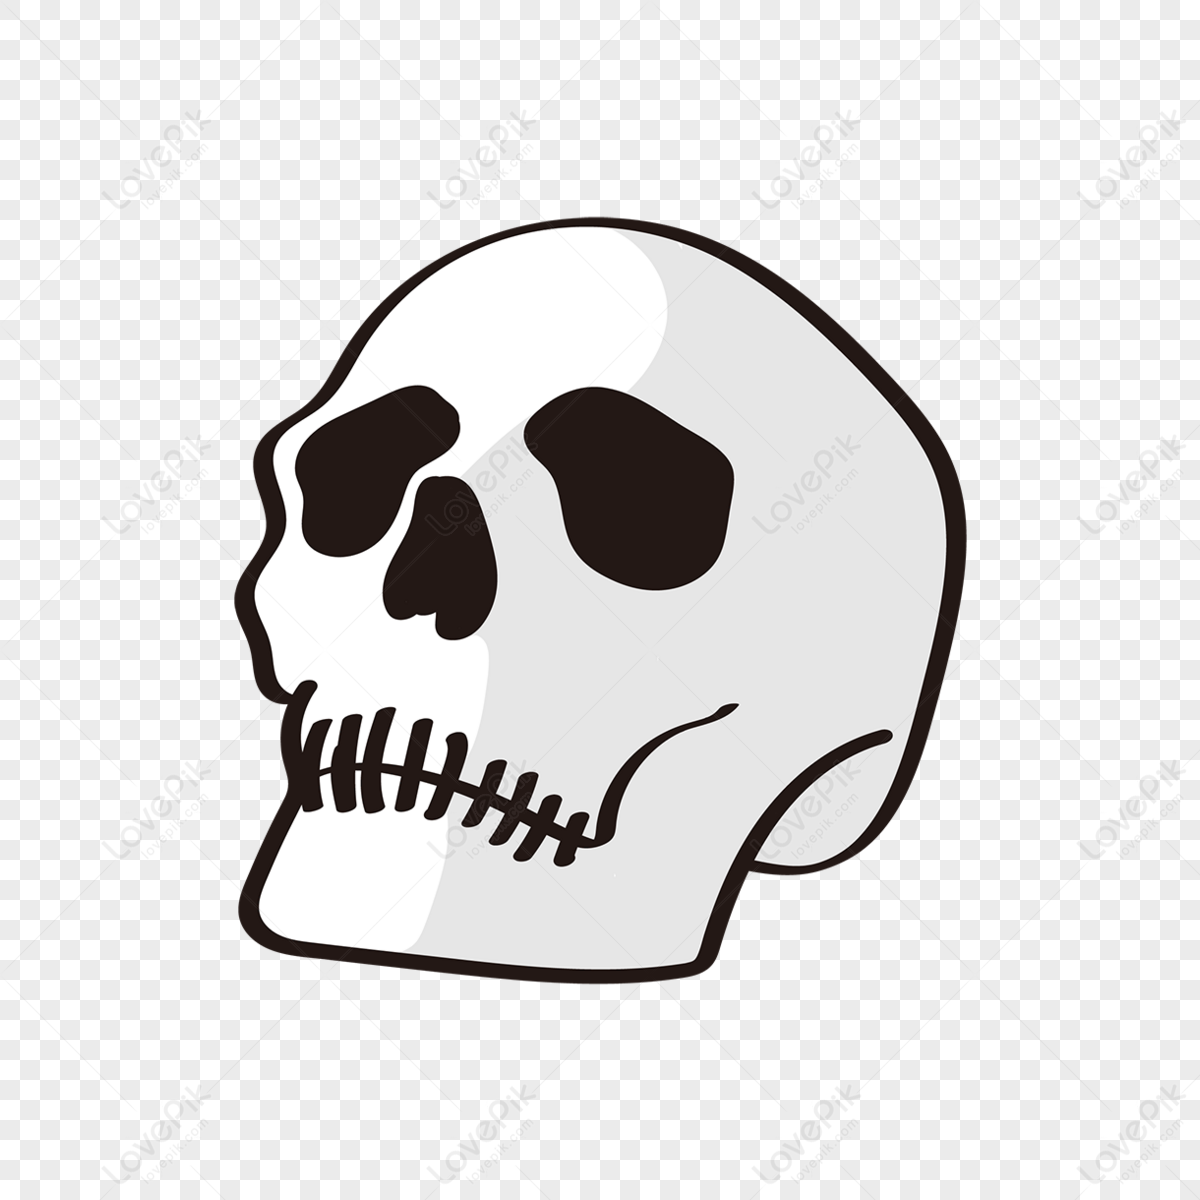 Set Dark Illustration Skull Head Bones Hand Drawn Hatching Outline Stock  Vector by ©Morspective 593695824